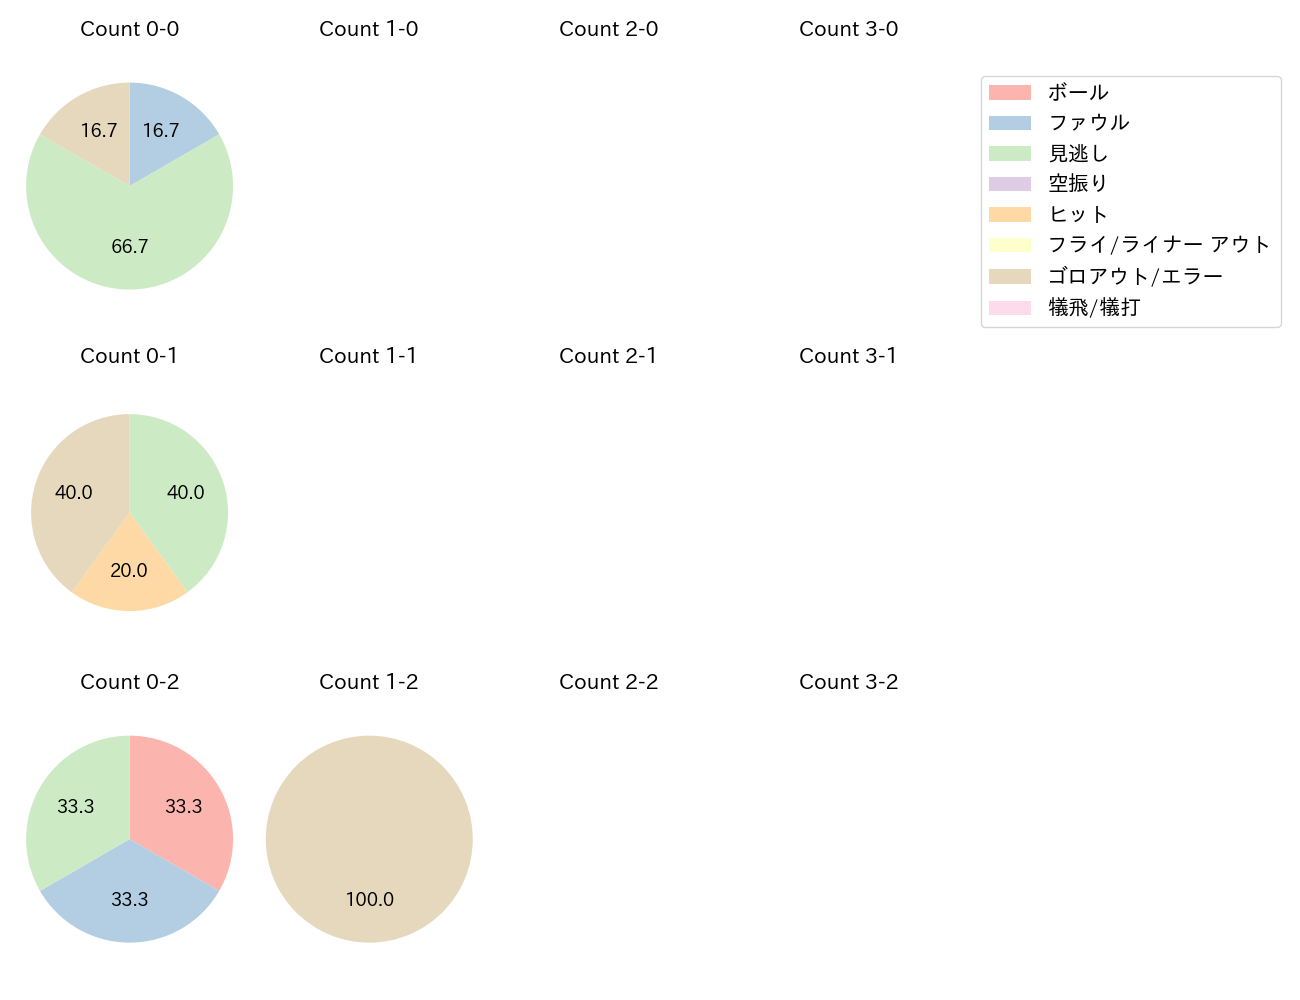 高橋 奎二の球数分布(2023年4月)